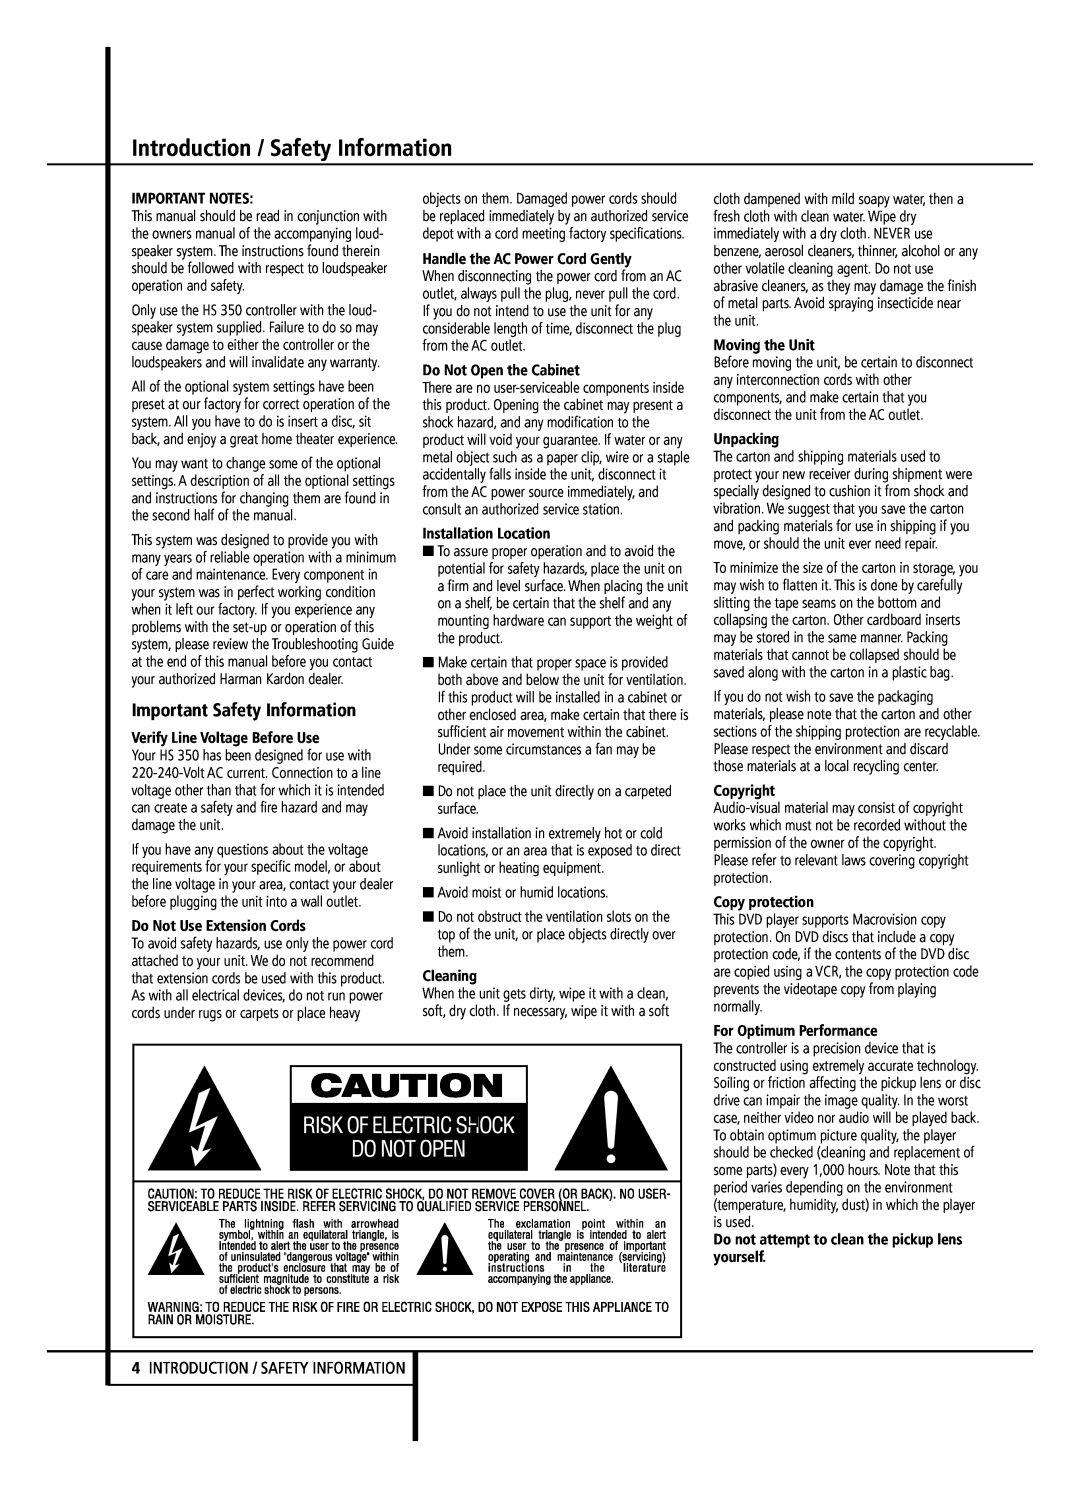 Harman-Kardon HS 350 owner manual Introduction / Safety Information, Important Safety Information 